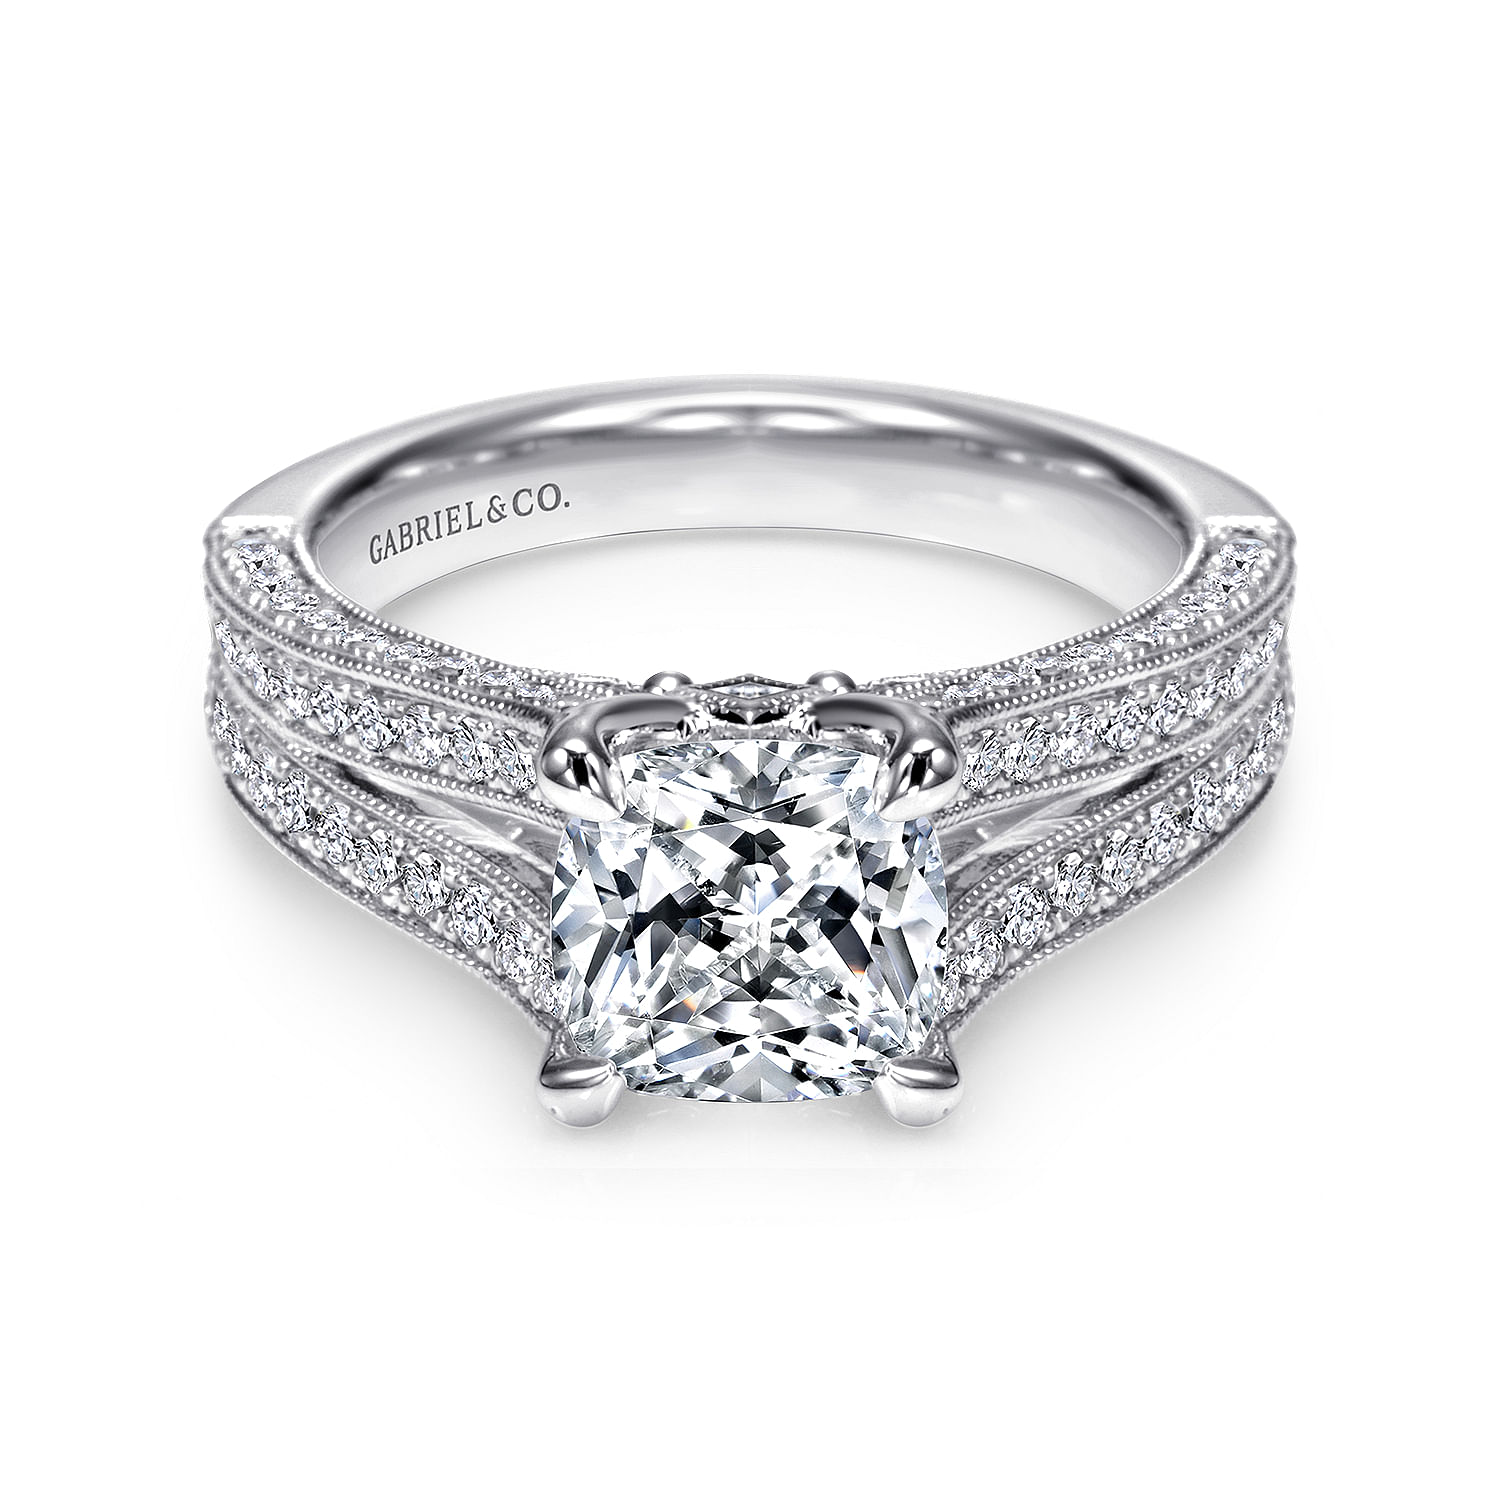 Vintage Inspired 14K White Gold Cushion Cut Split Shank Diamond Engagement Ring